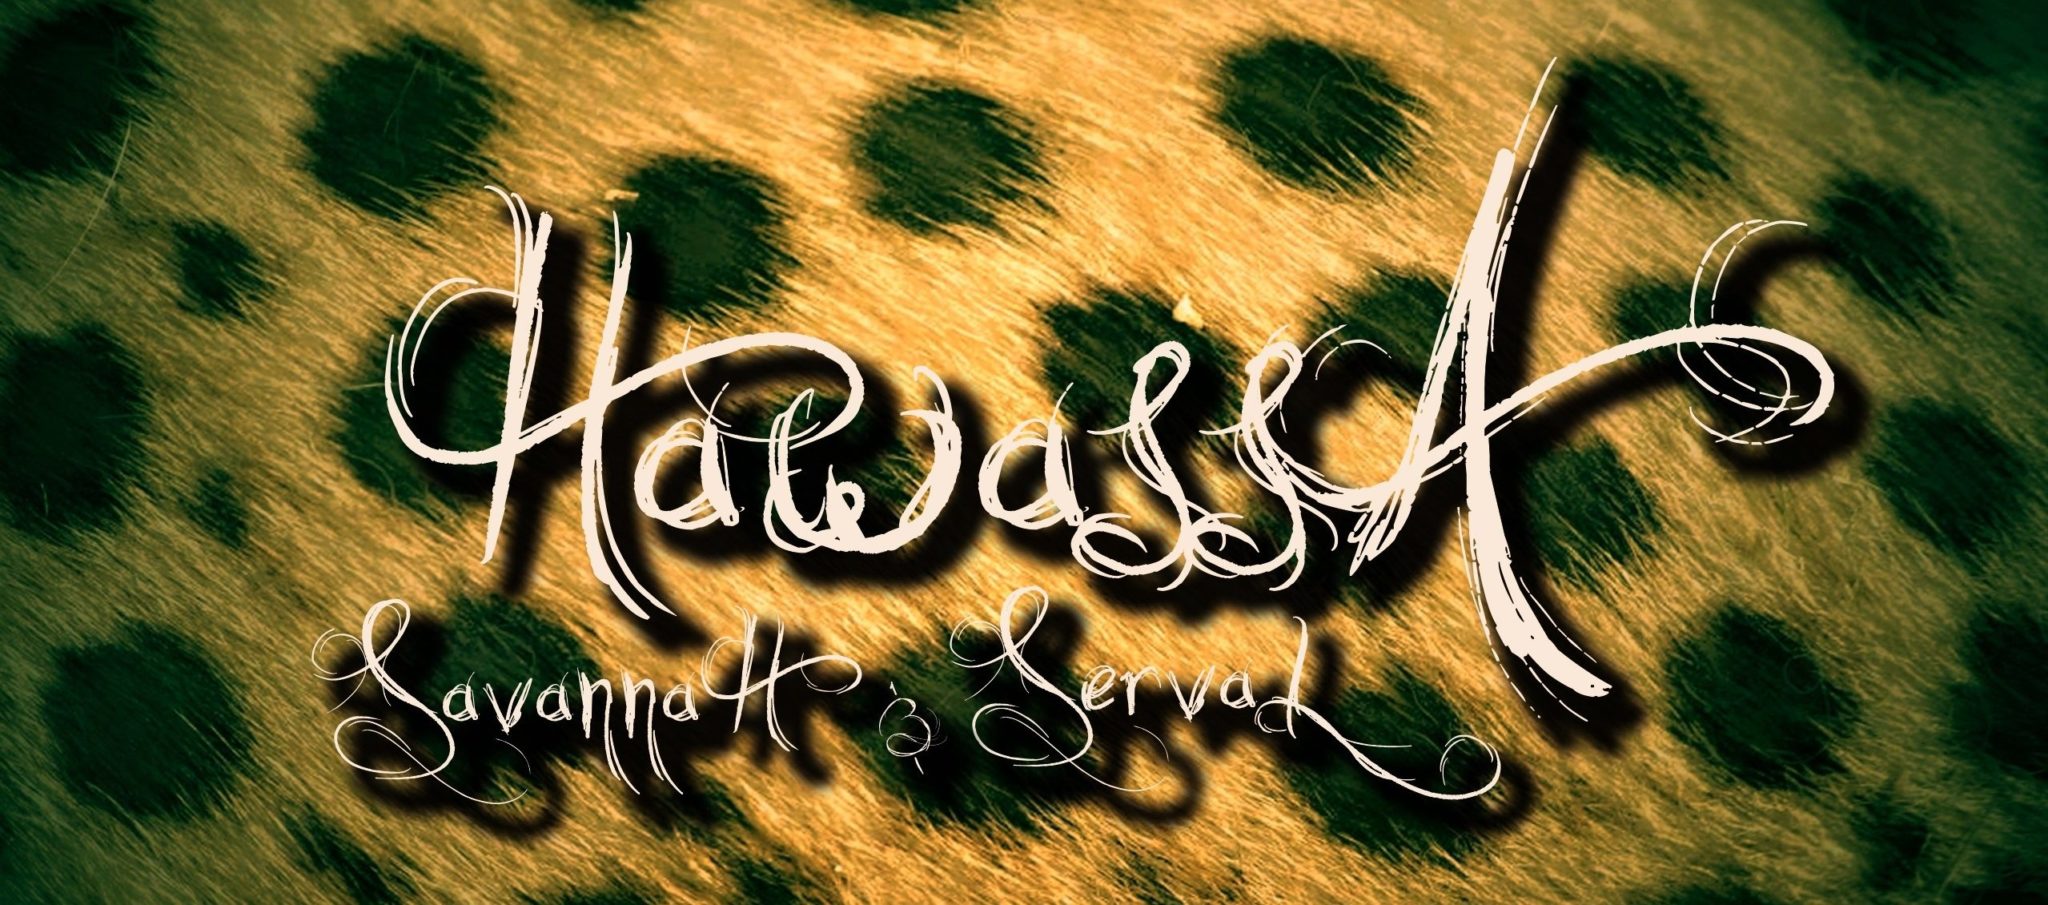 Hawassa serval and savannah cat